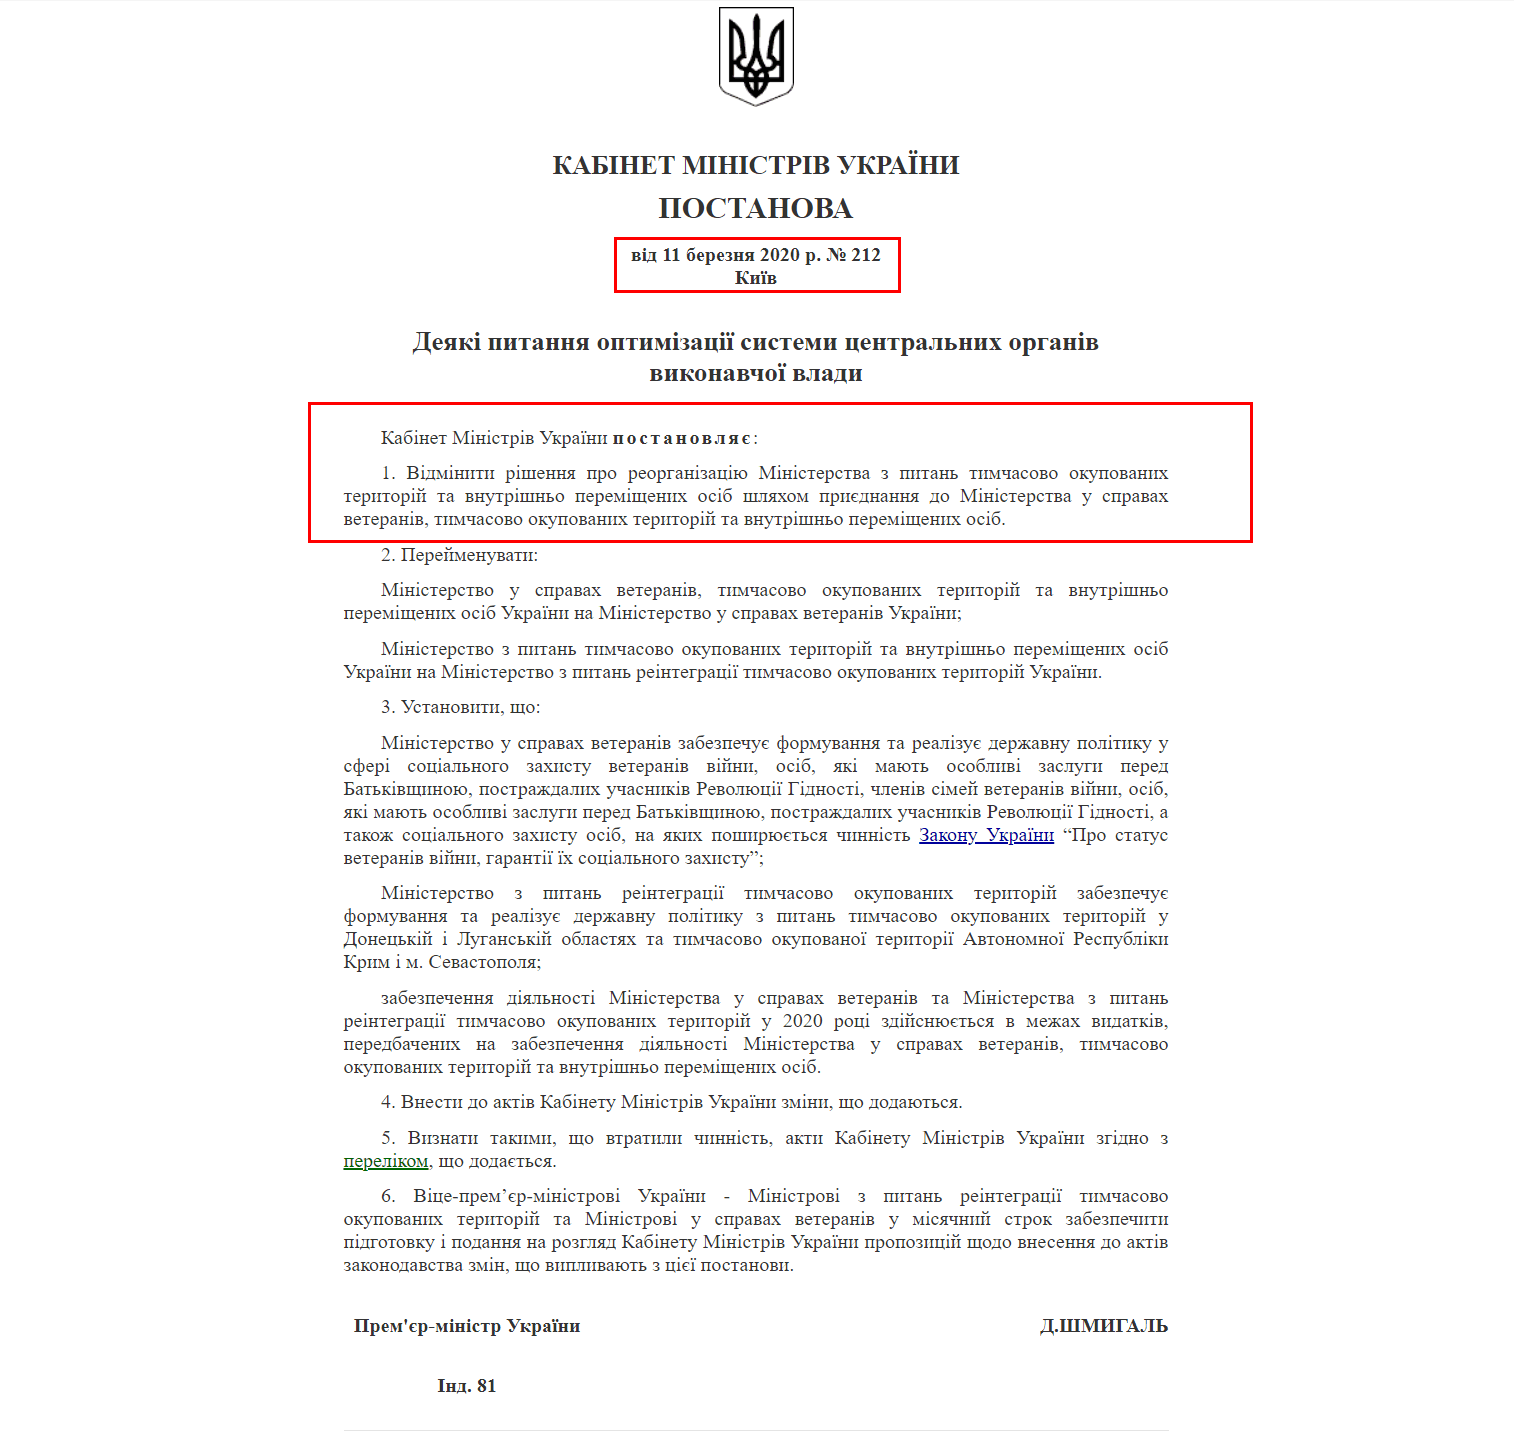 https://zakon.rada.gov.ua/laws/show/212-2020-п#Text